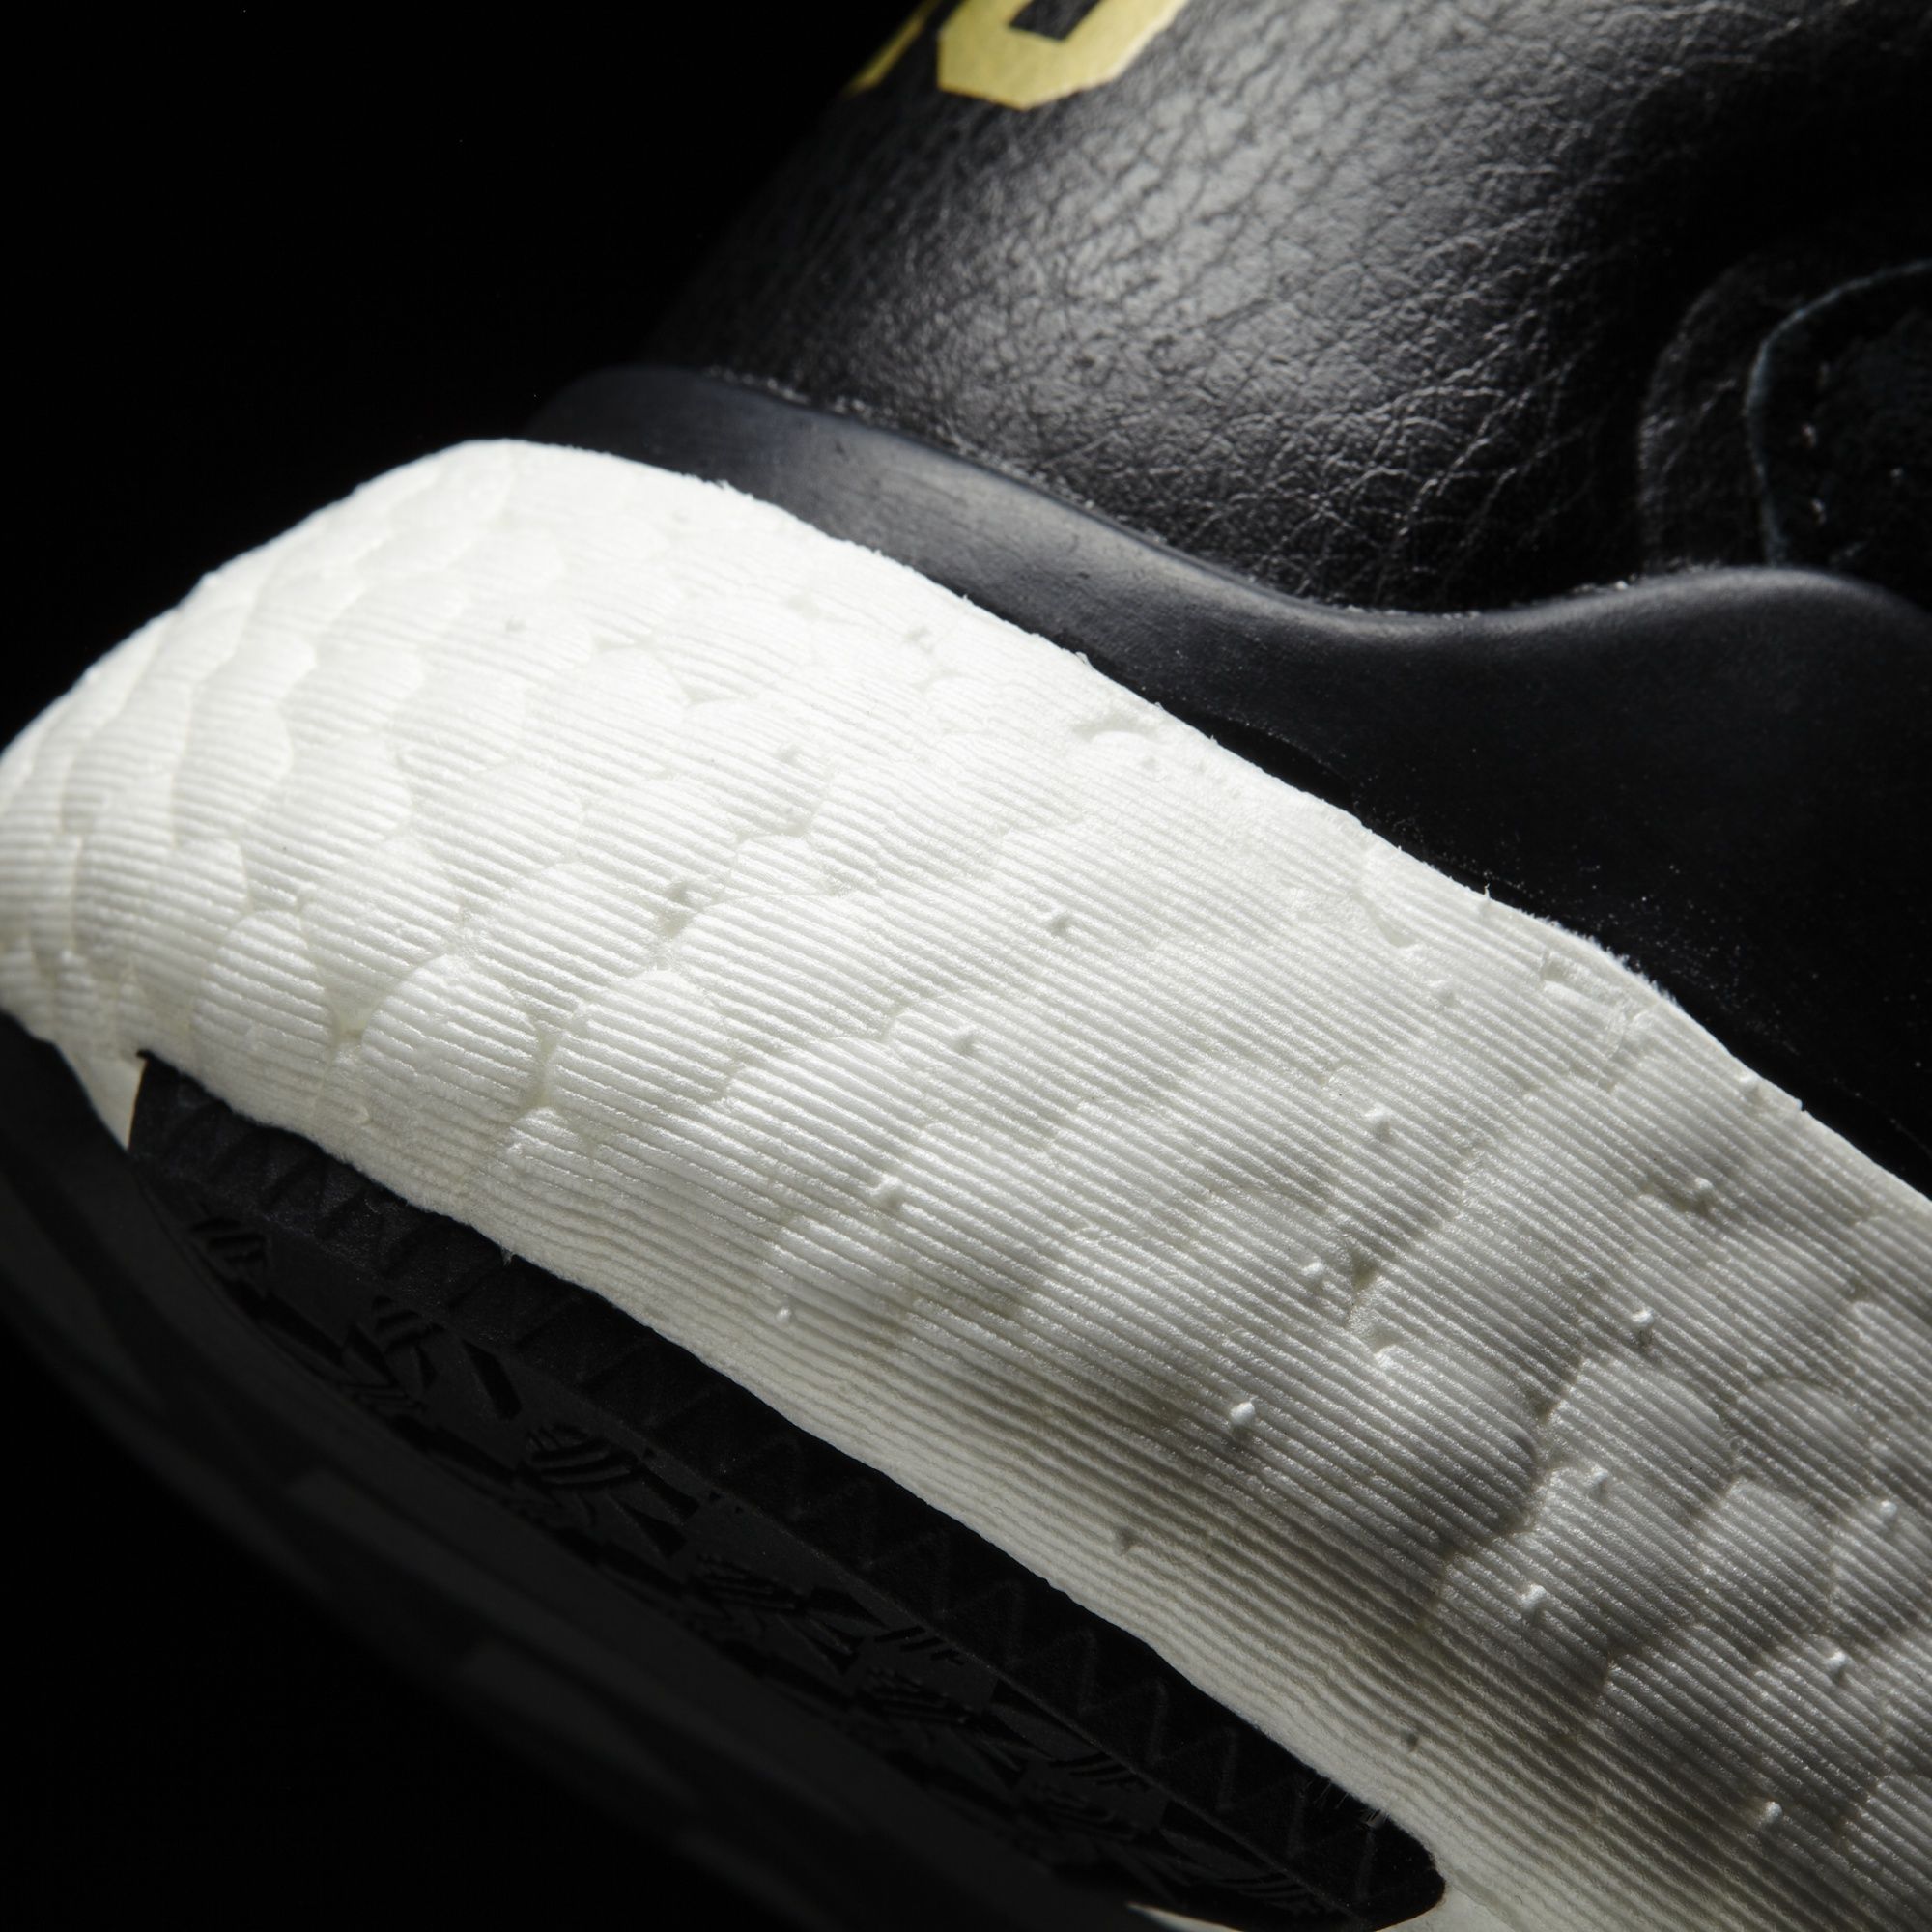 Adidas Busenitz 10 Year Anniversary Black Gold Detail